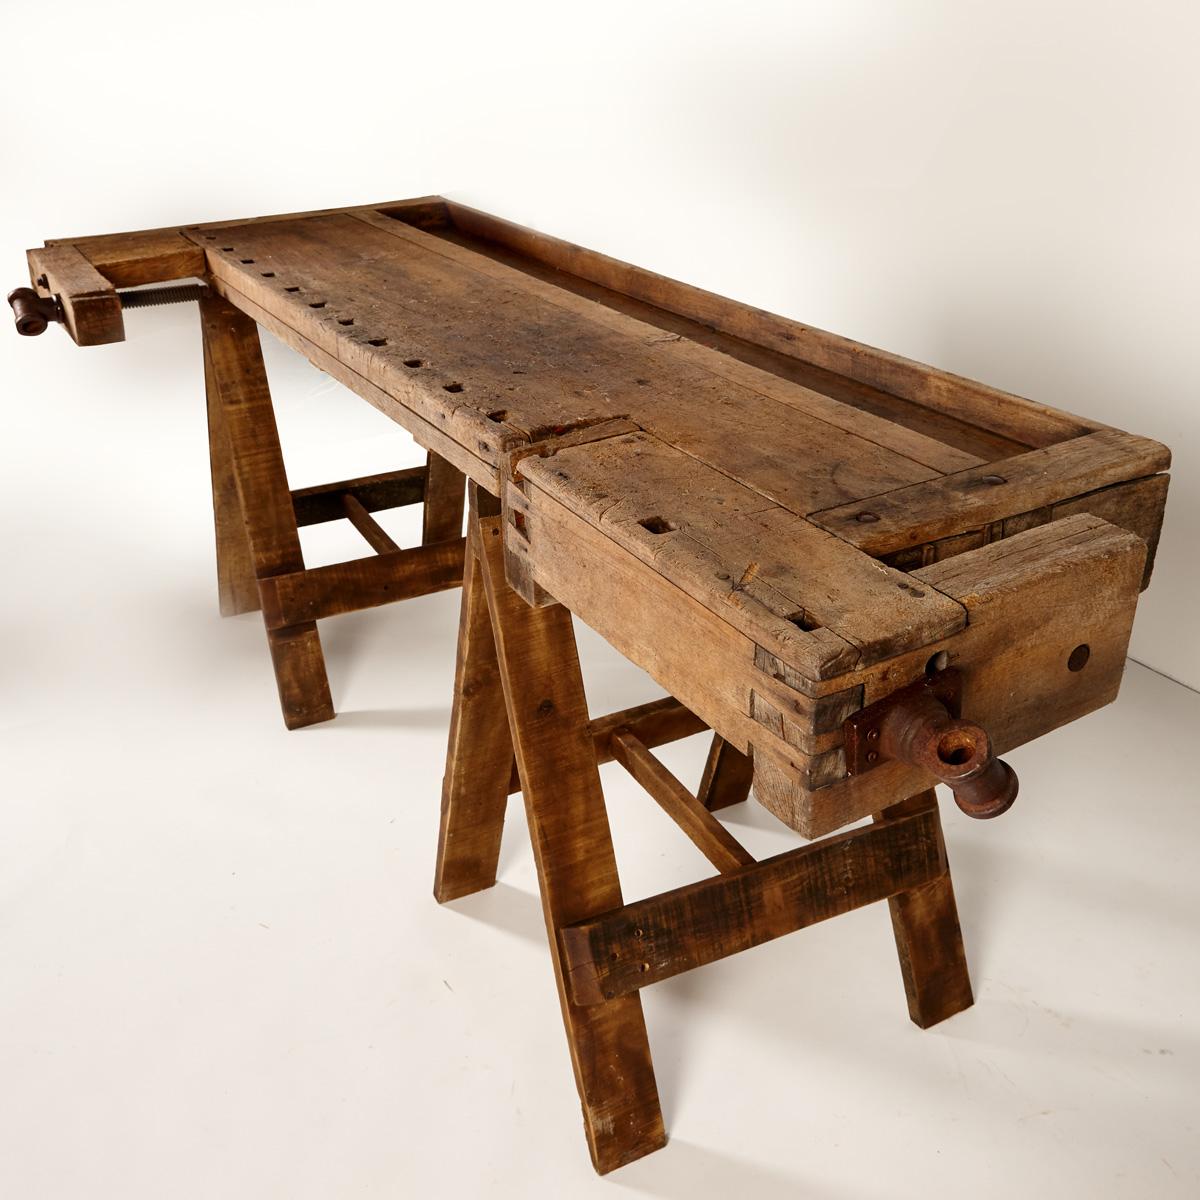 An Antique Dutch Woodworking Bench - Price Estimate 750 